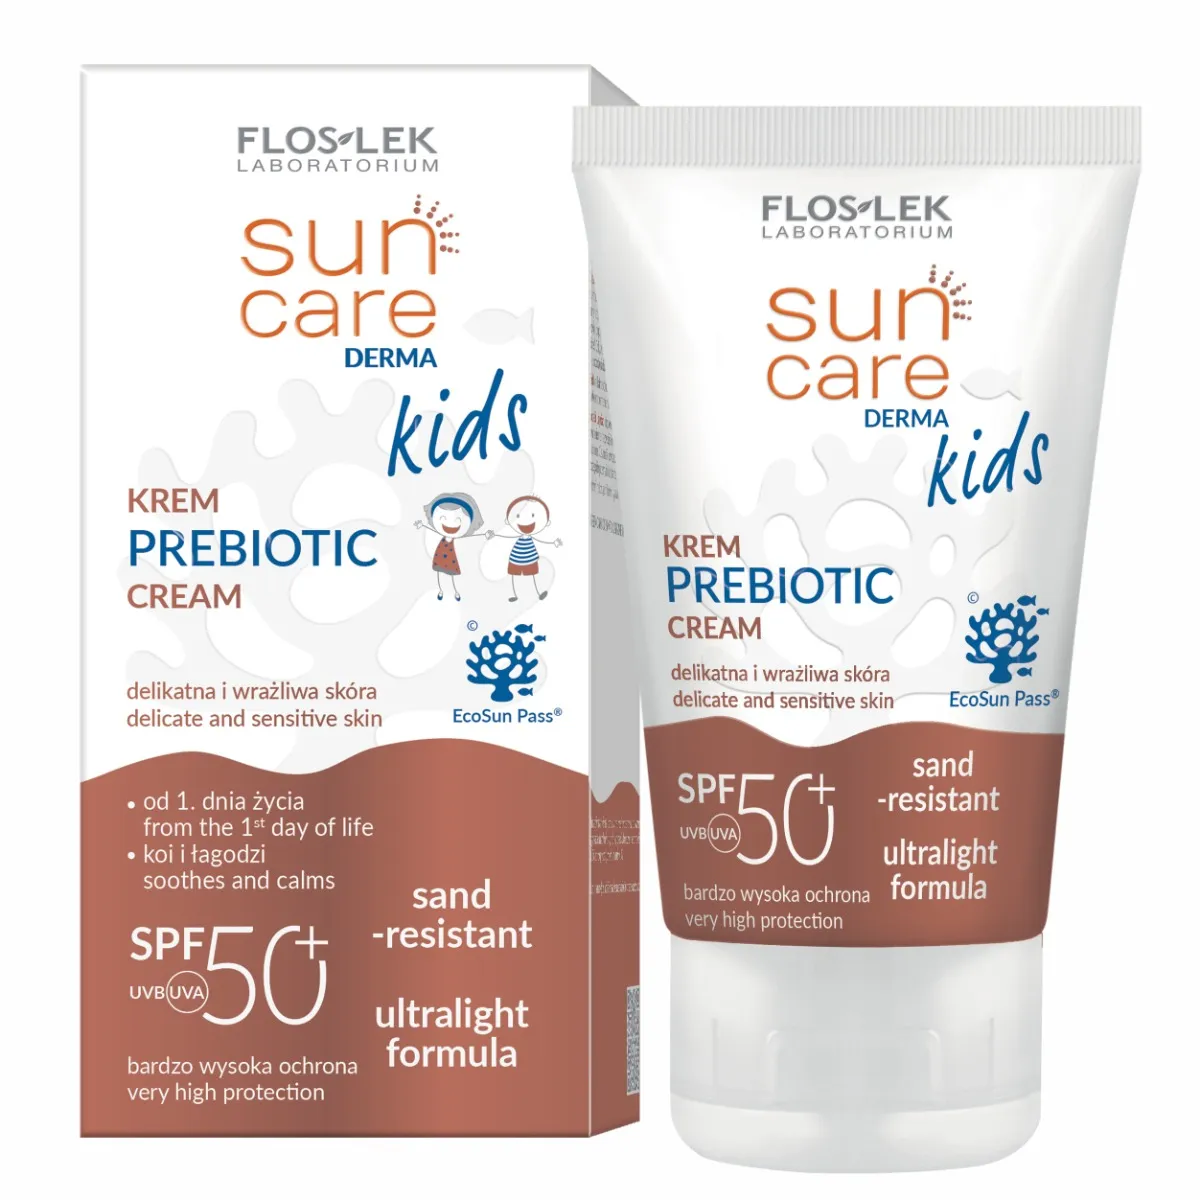 Floslek Sun Care Derma Kids Prebiotic krem ochronny SPF 50+, 50 ml